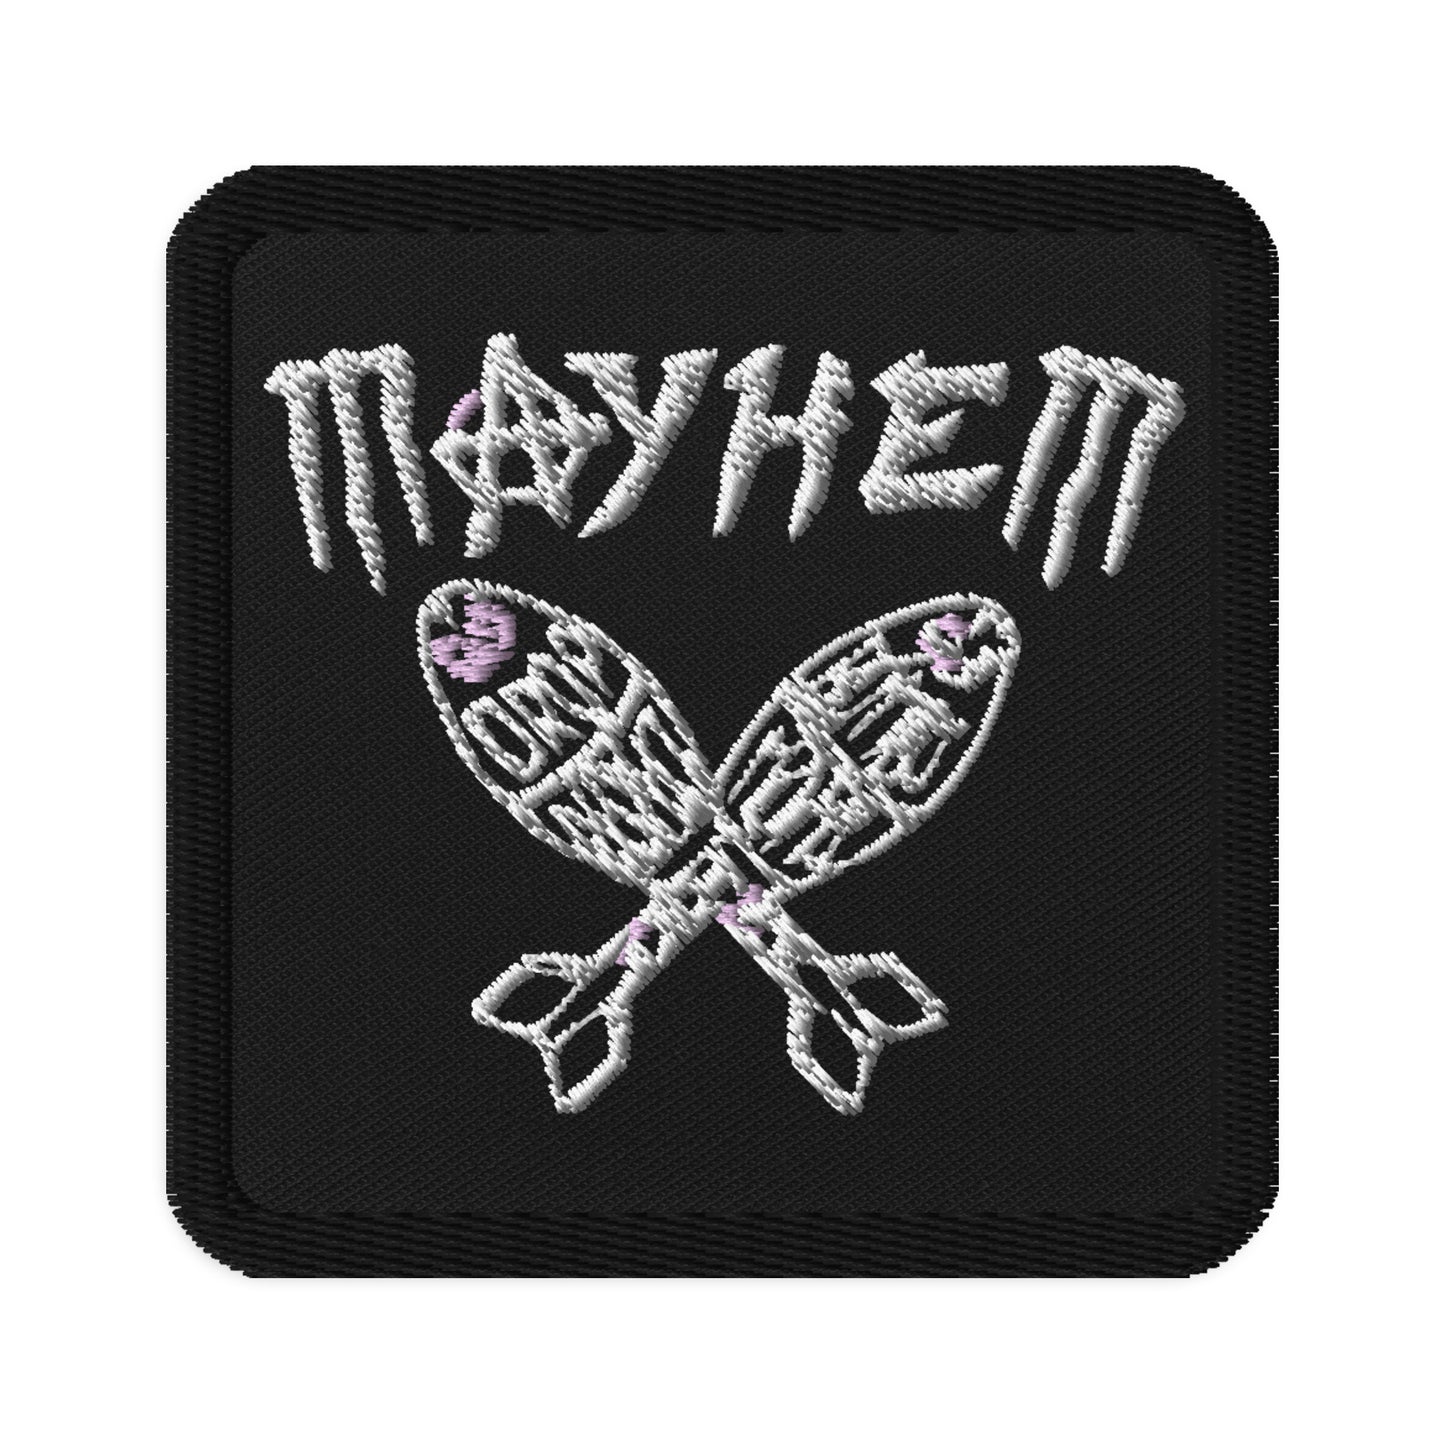 Legacy Mayhem Embroidered Patch